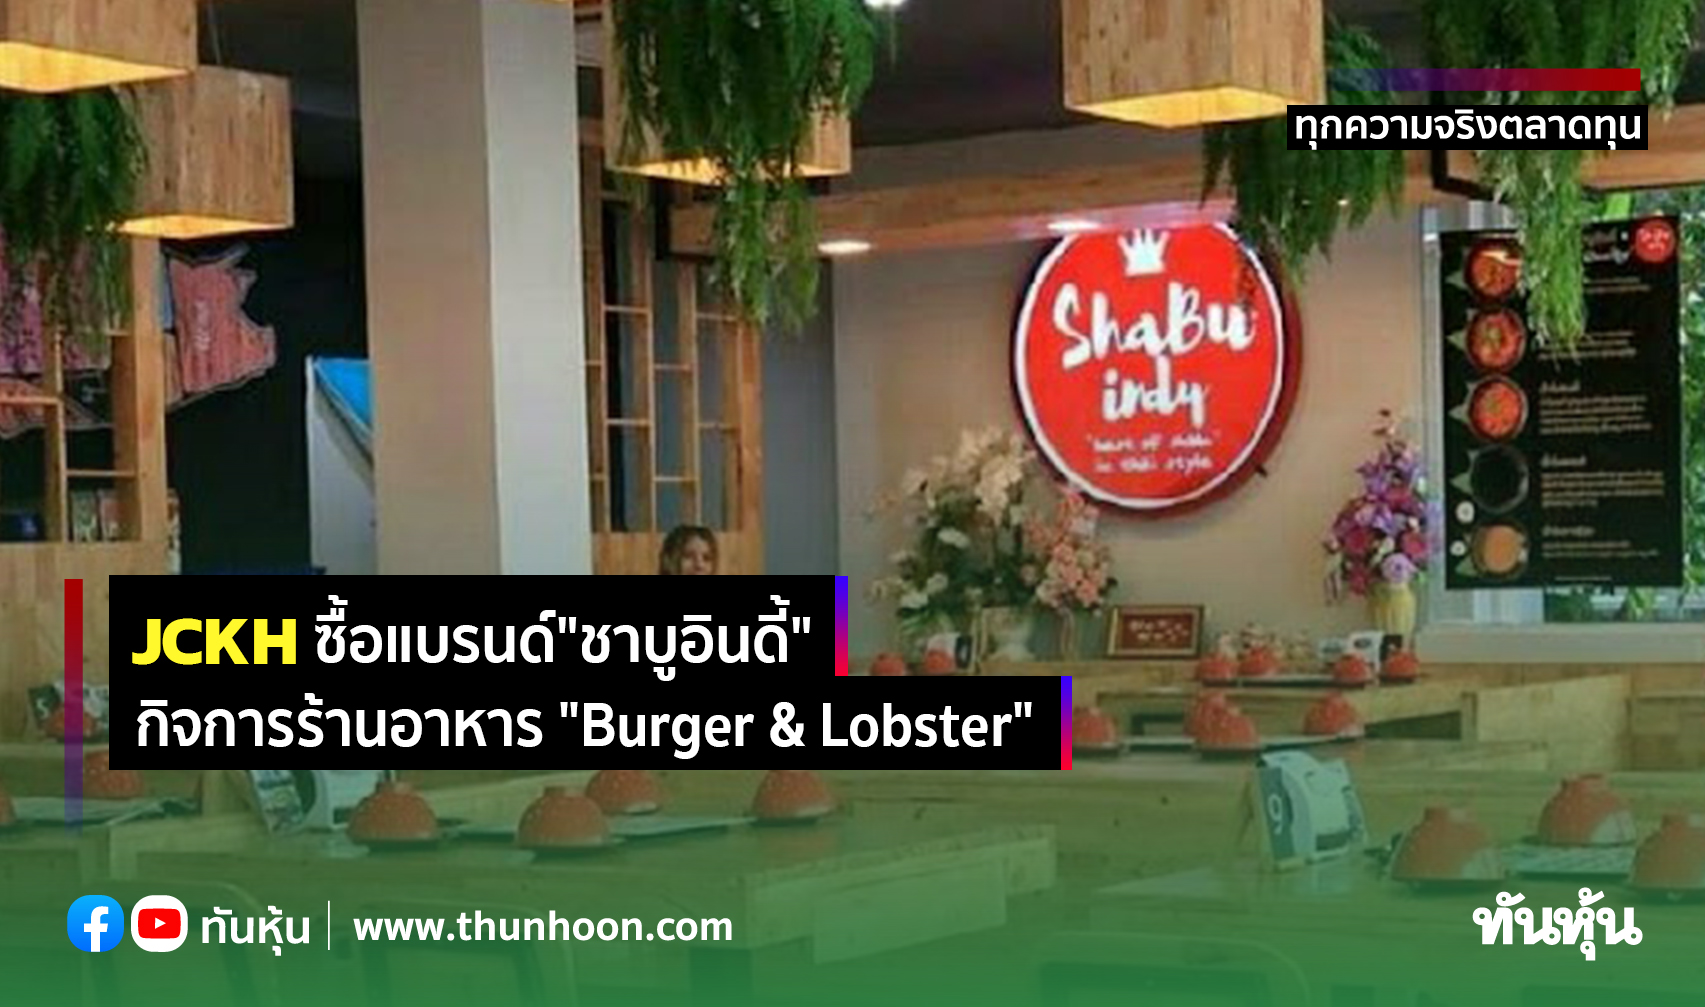 JCKH ซื้อแบรนด์"ชาบูอินดี้"-กิจการร้านอาหาร "Burger & Lobster"